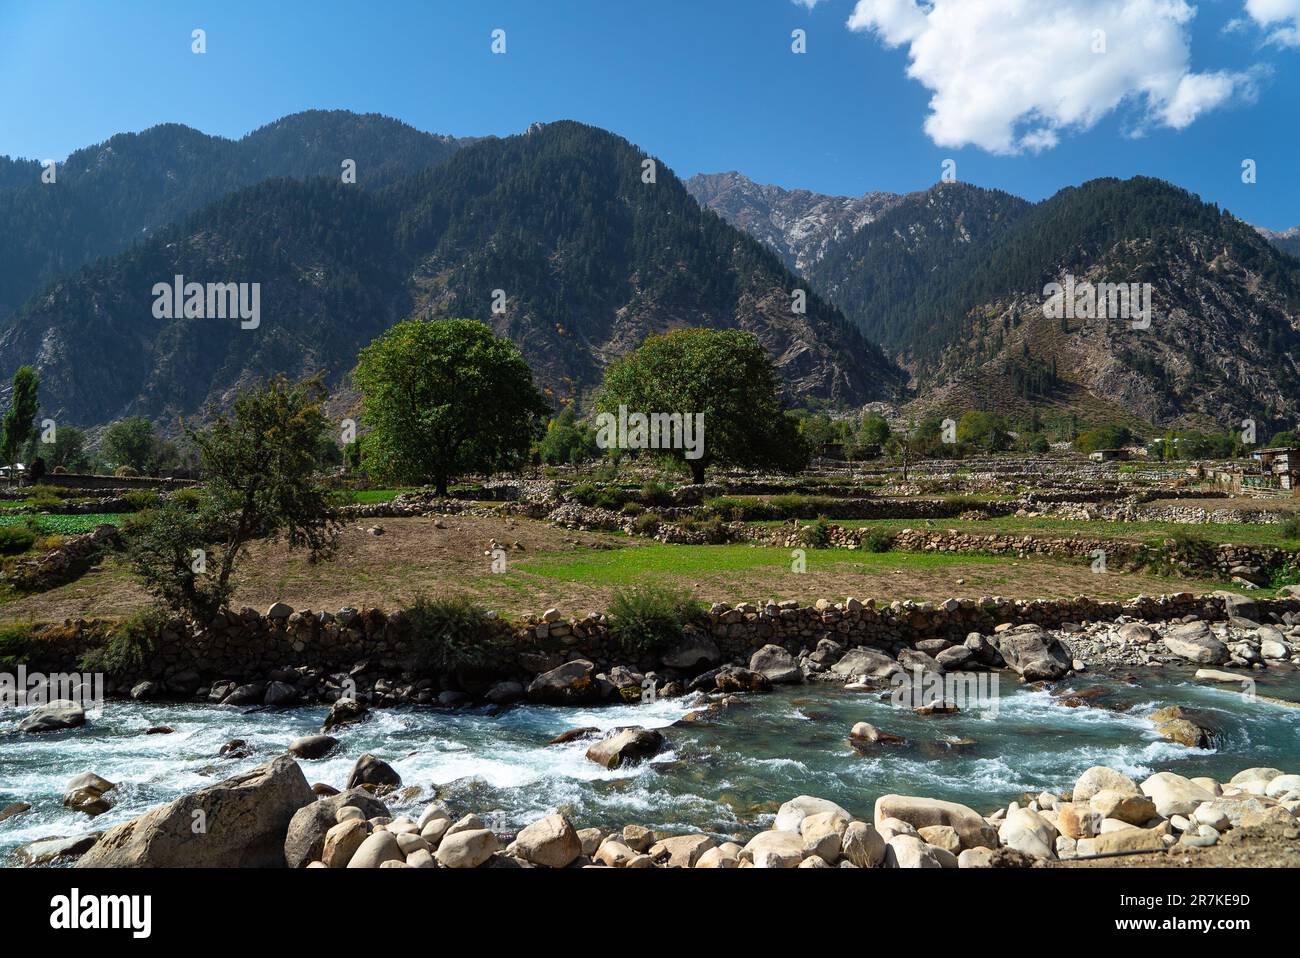 Kumrat Valley, The Panjkora River, Which Originates in the Hindu Kush Mountains, Runs Through Kumrat Valley, Pakistan. Stock Photo